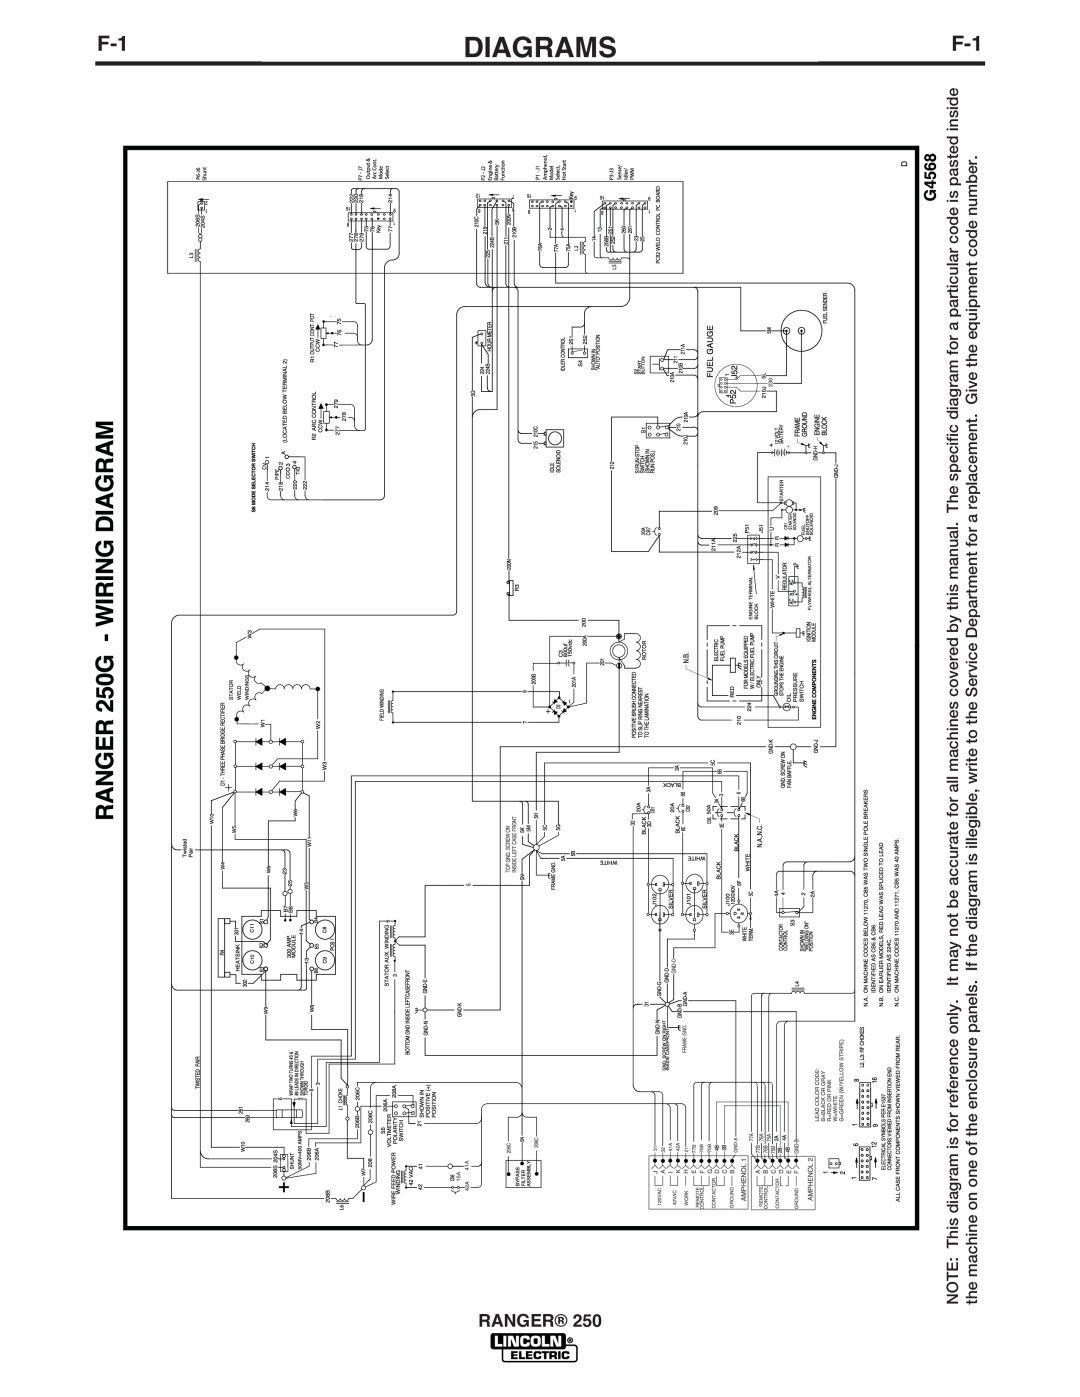 Lincoln Electric IM919 manual Diagrams 